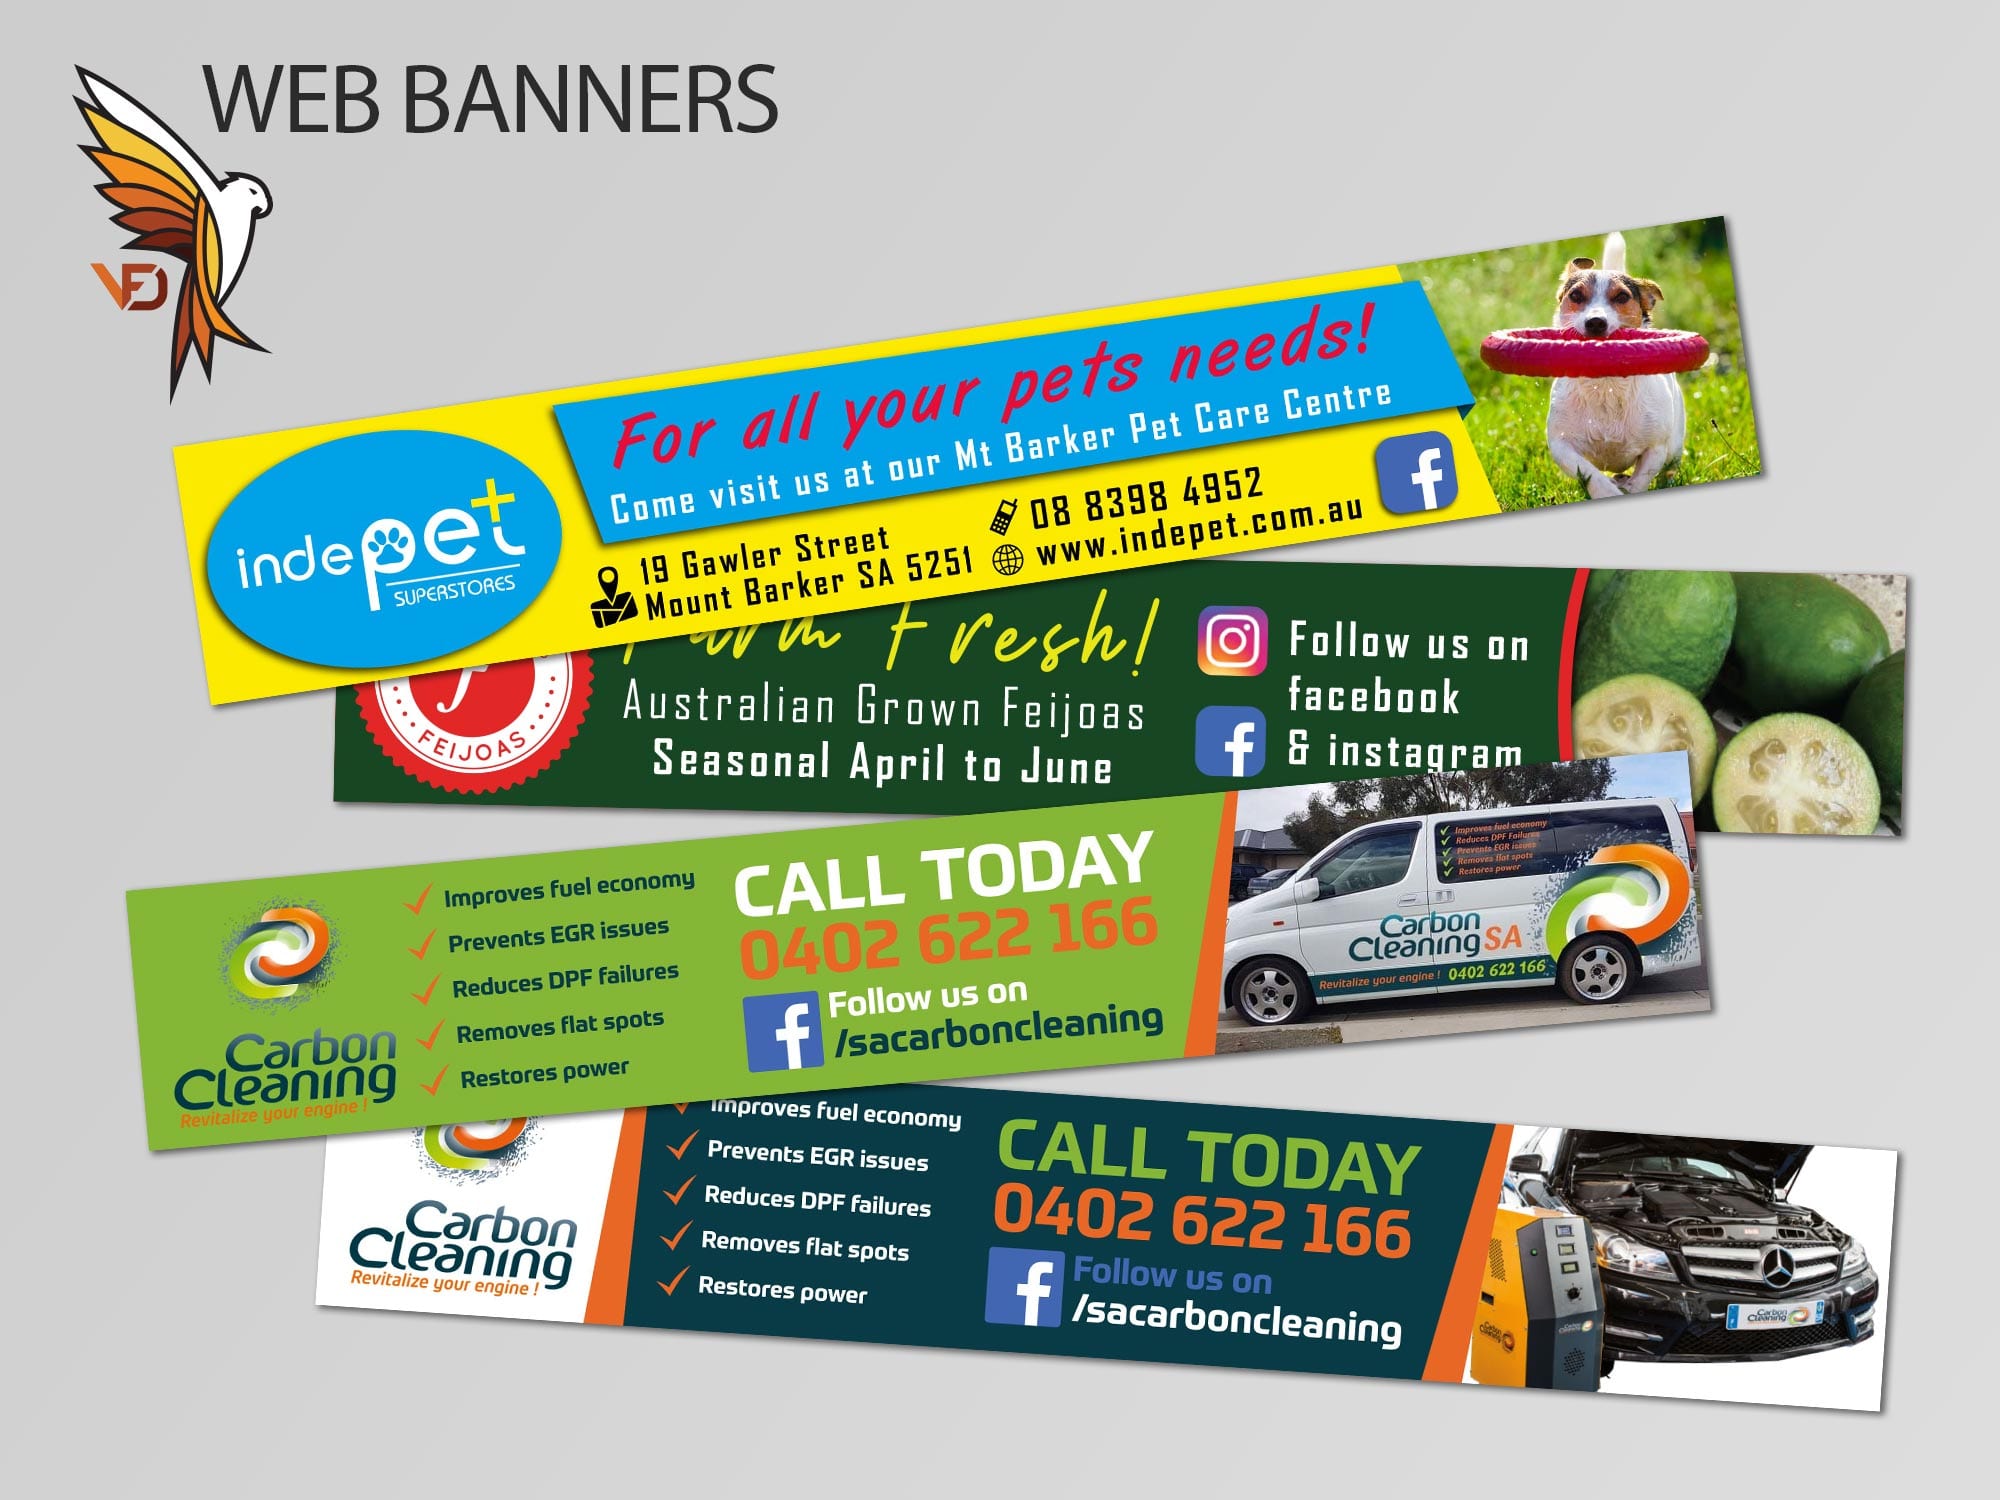 Web Banners